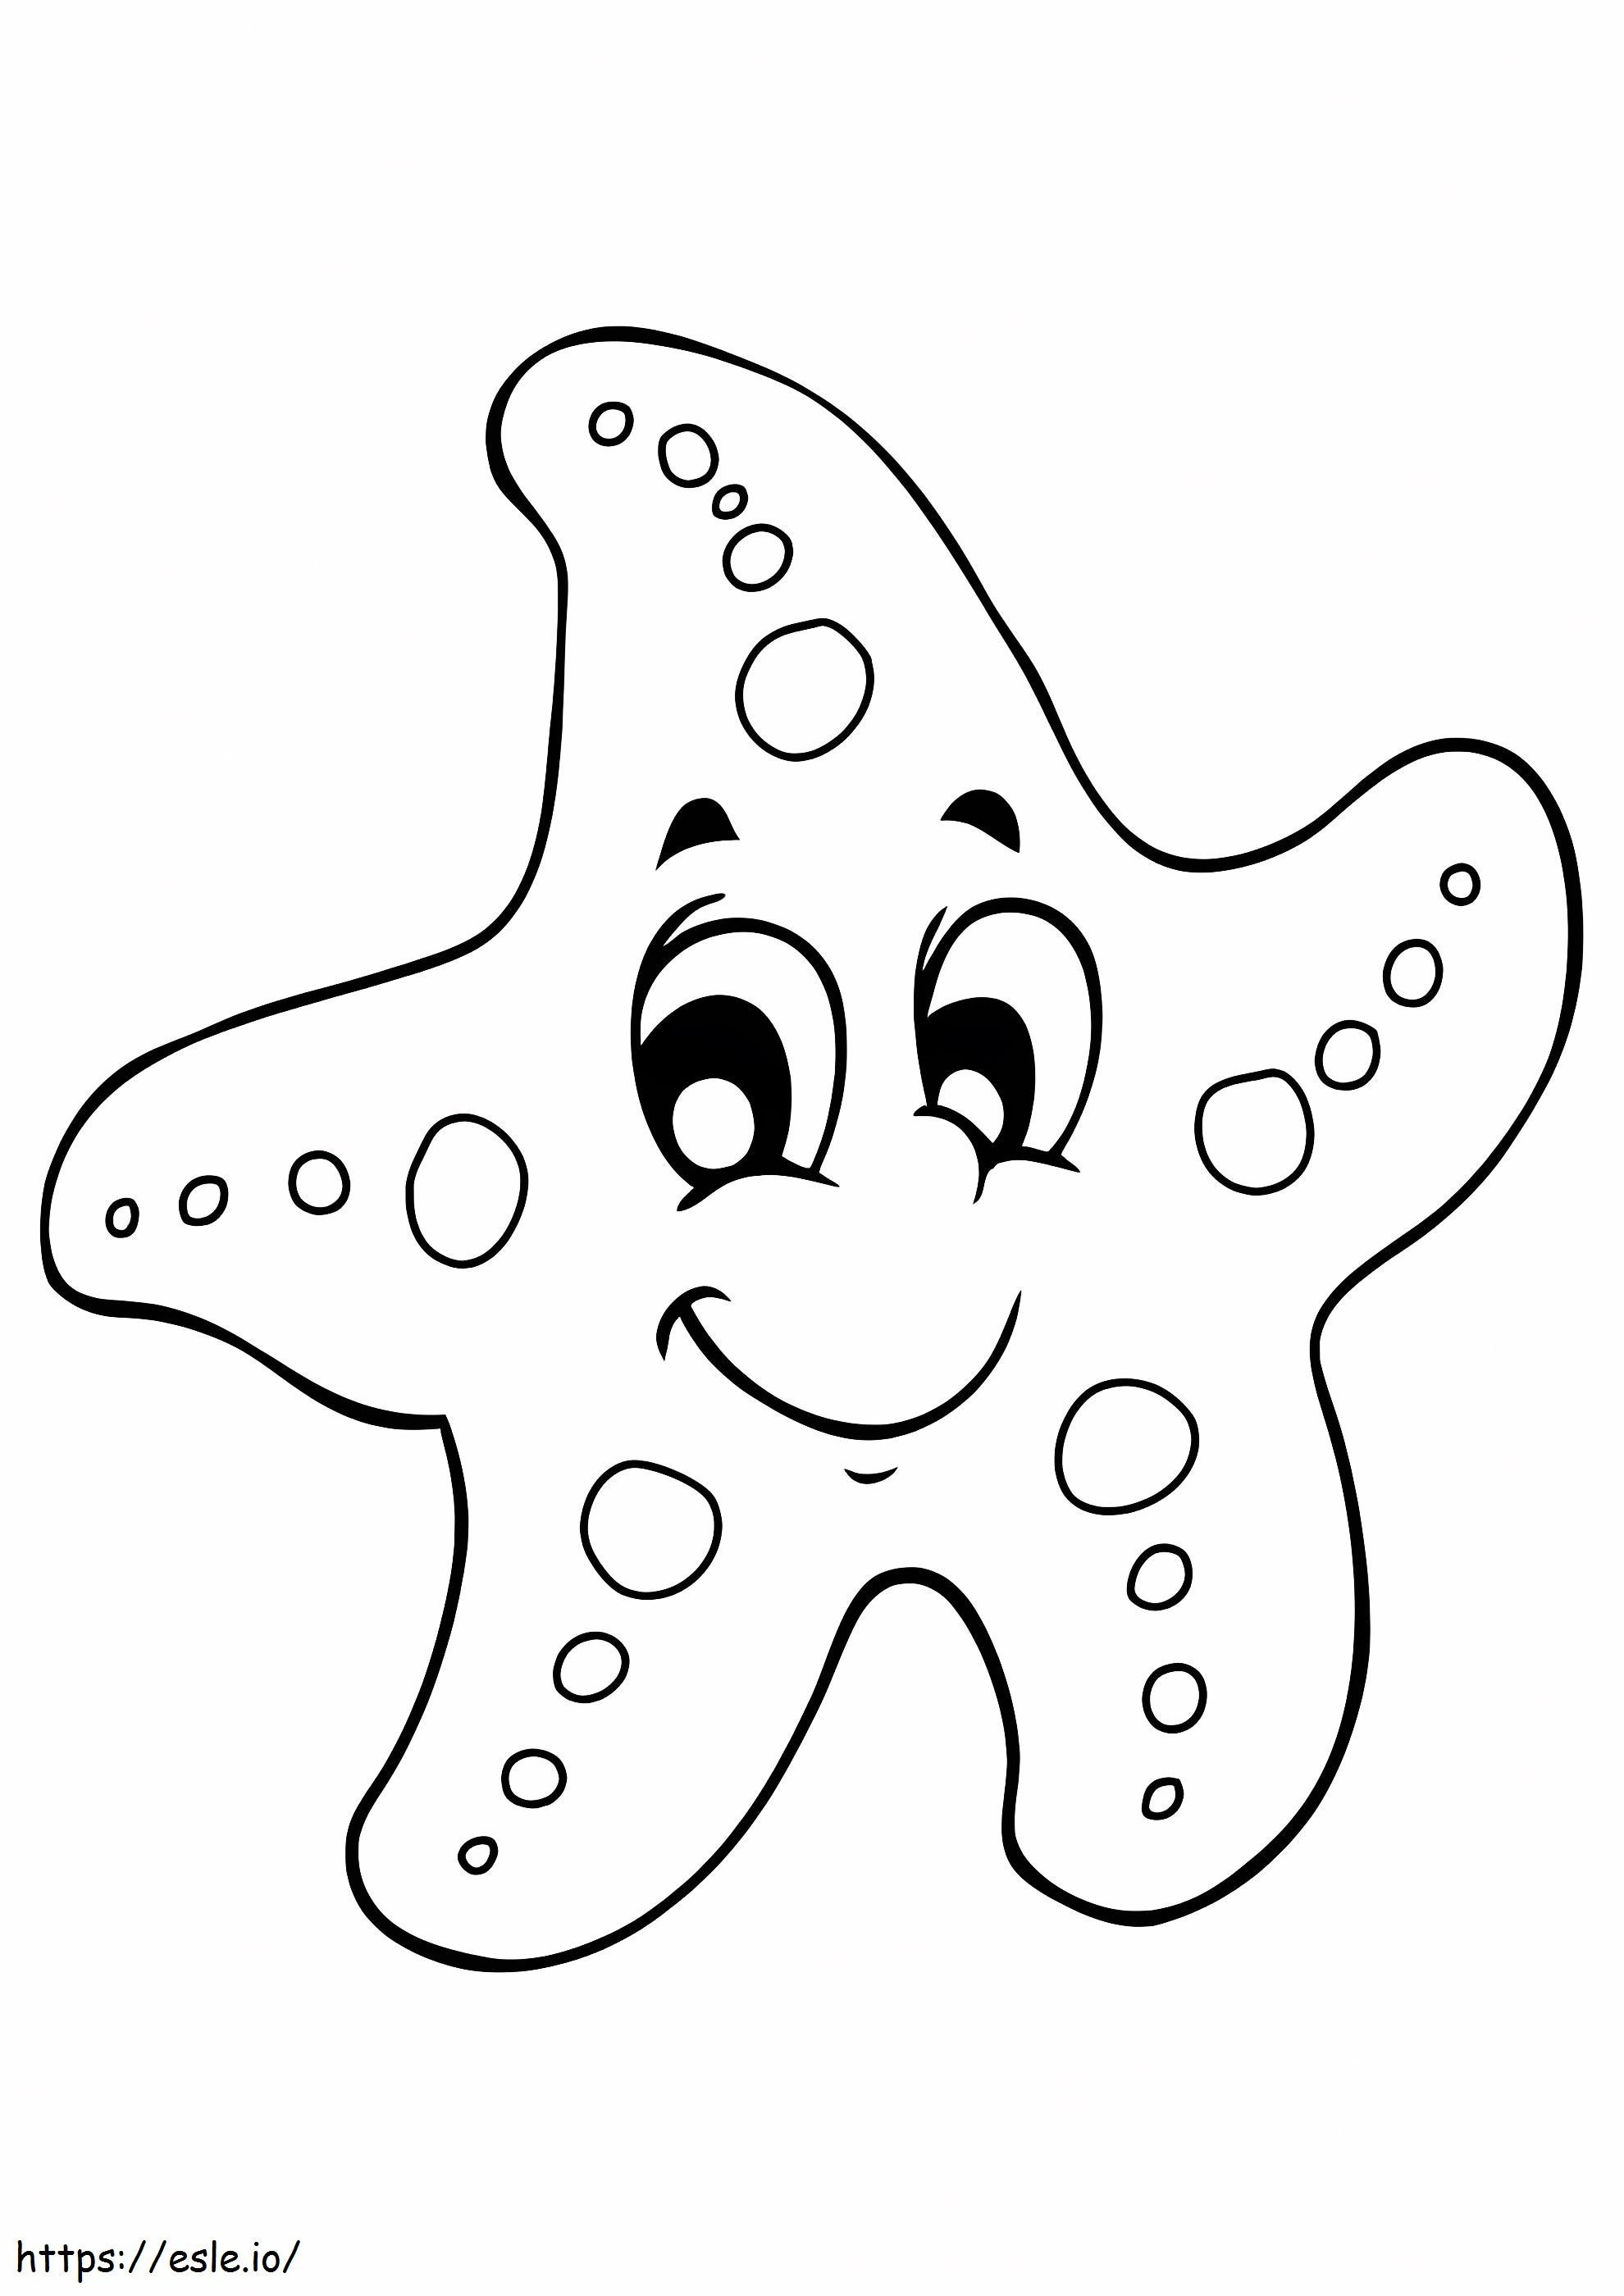 Cool Starfish Sonriendo coloring page